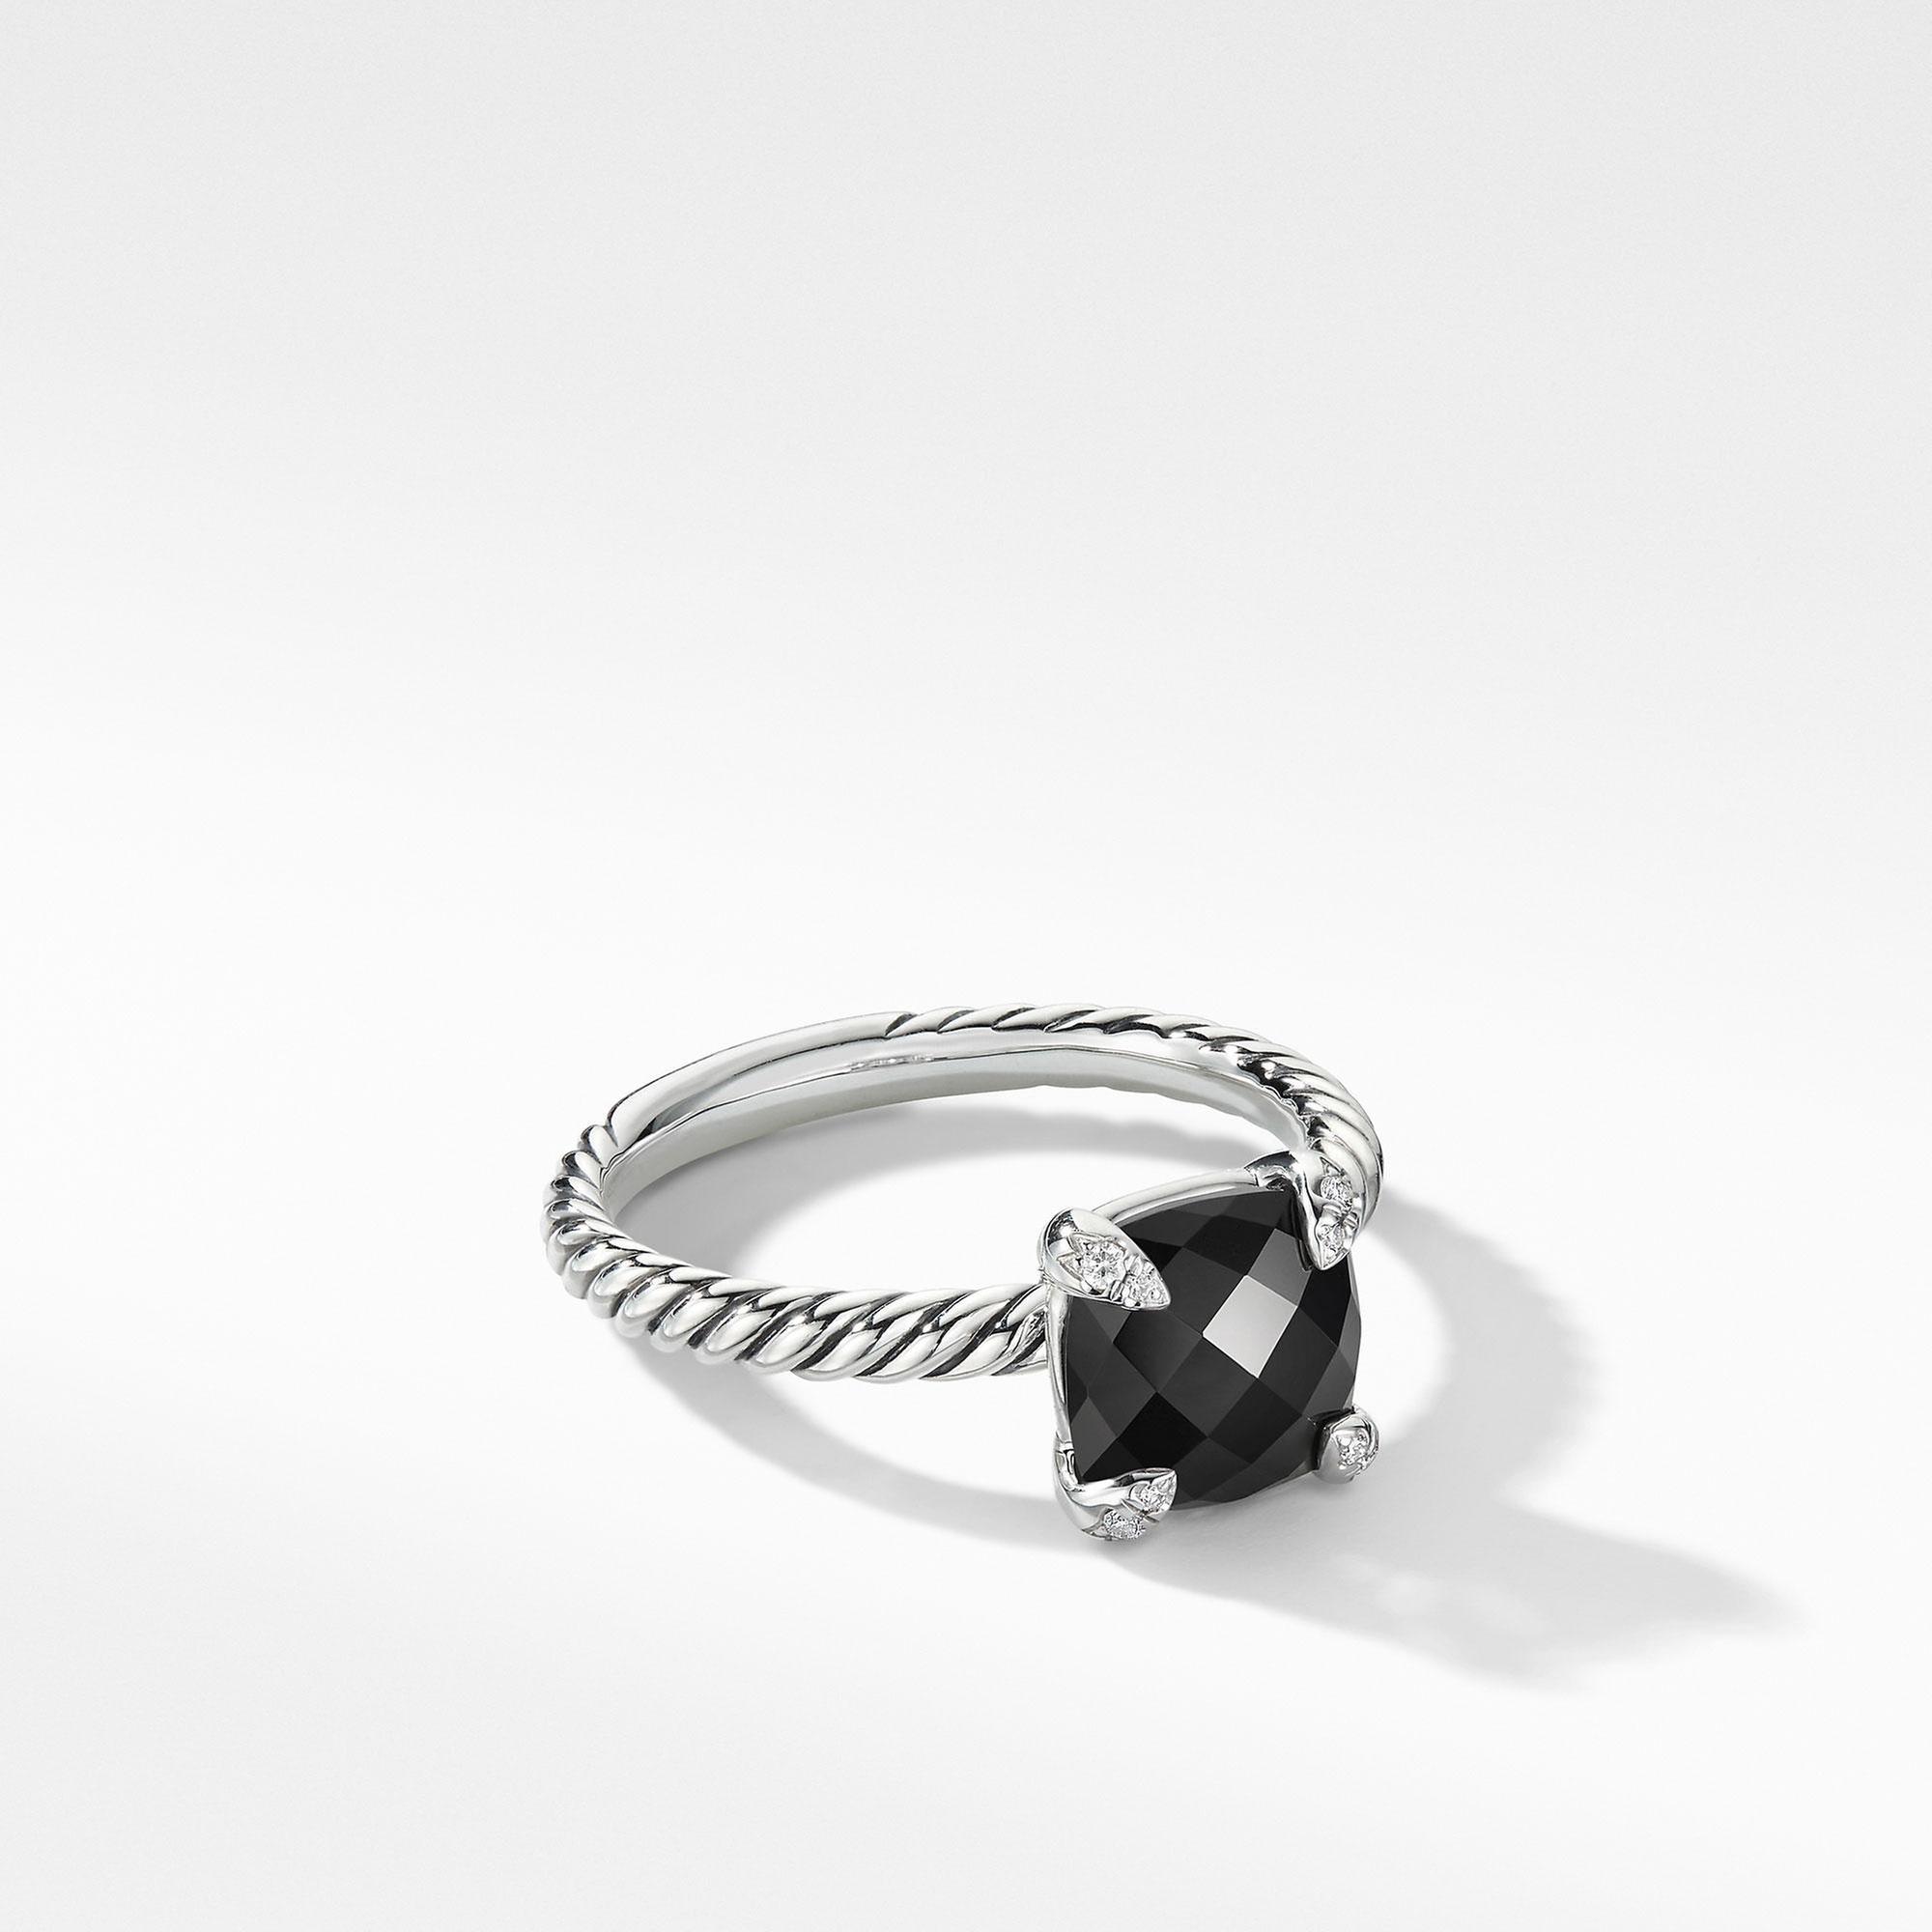 David Yurman Chatelaine Ring with Black Onyx and Diamonds | Size 4.5